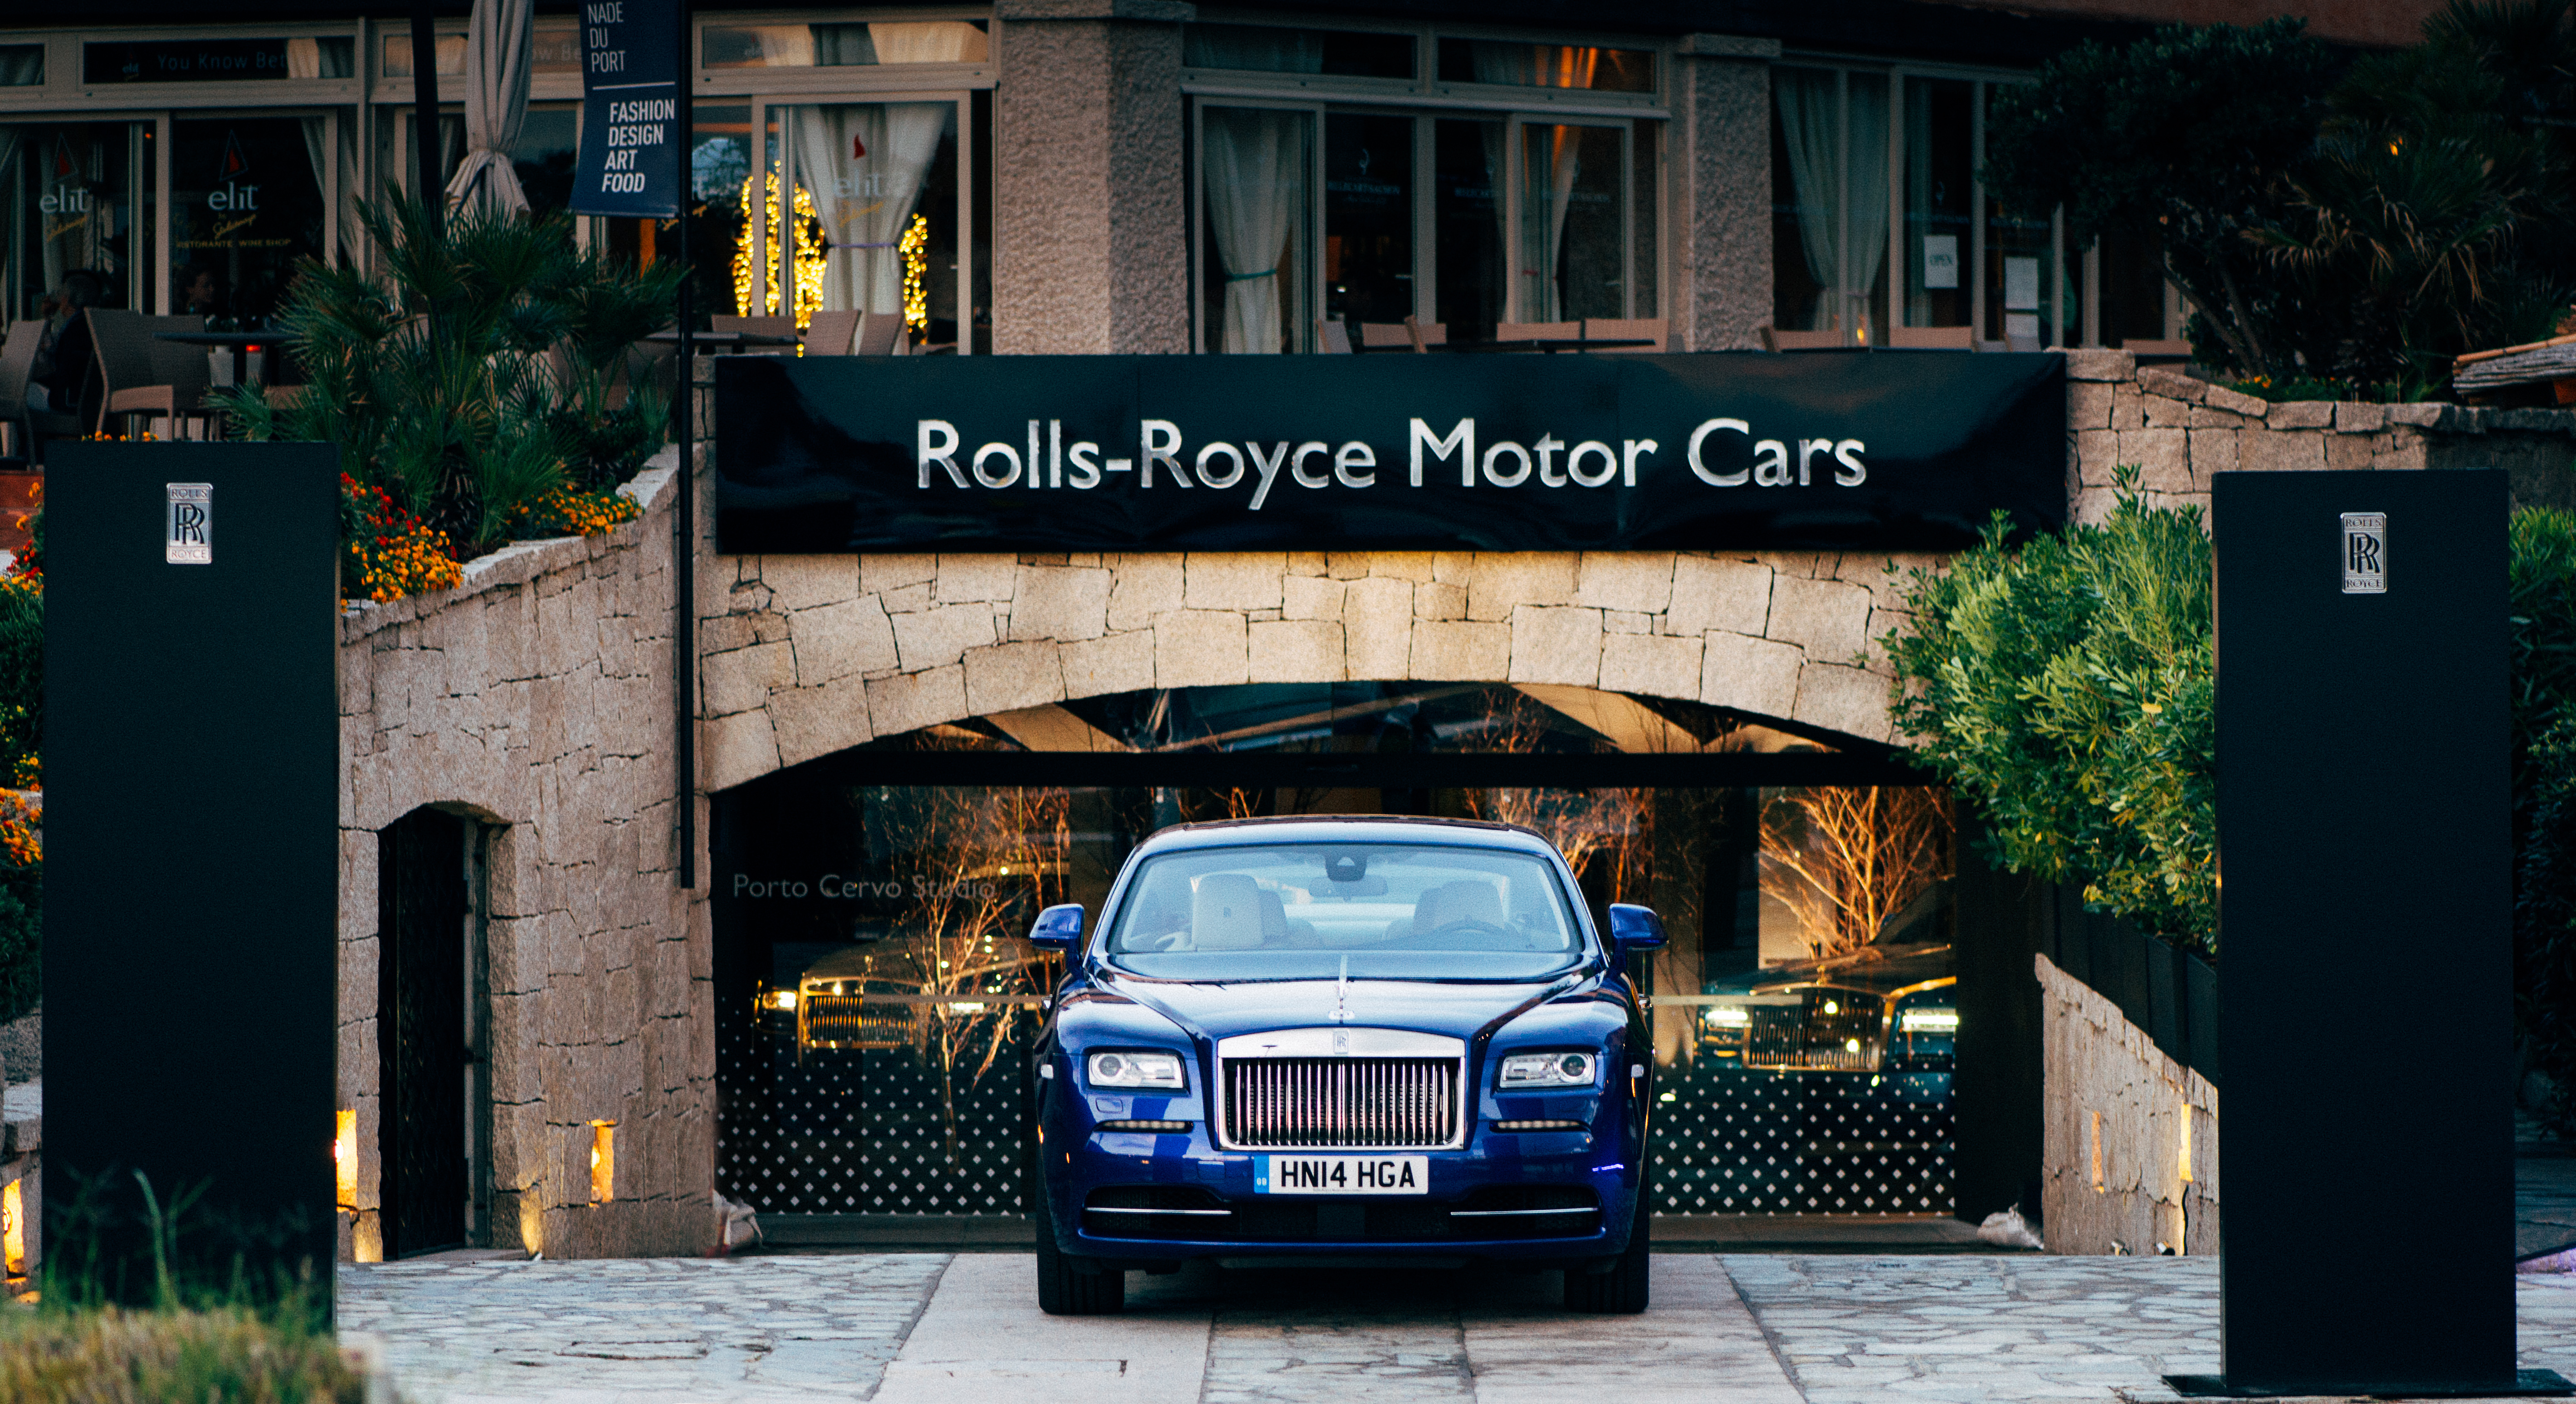  Rolls-Royce Motor Cars apre un innovativo “summer studio” a Porto Cervo